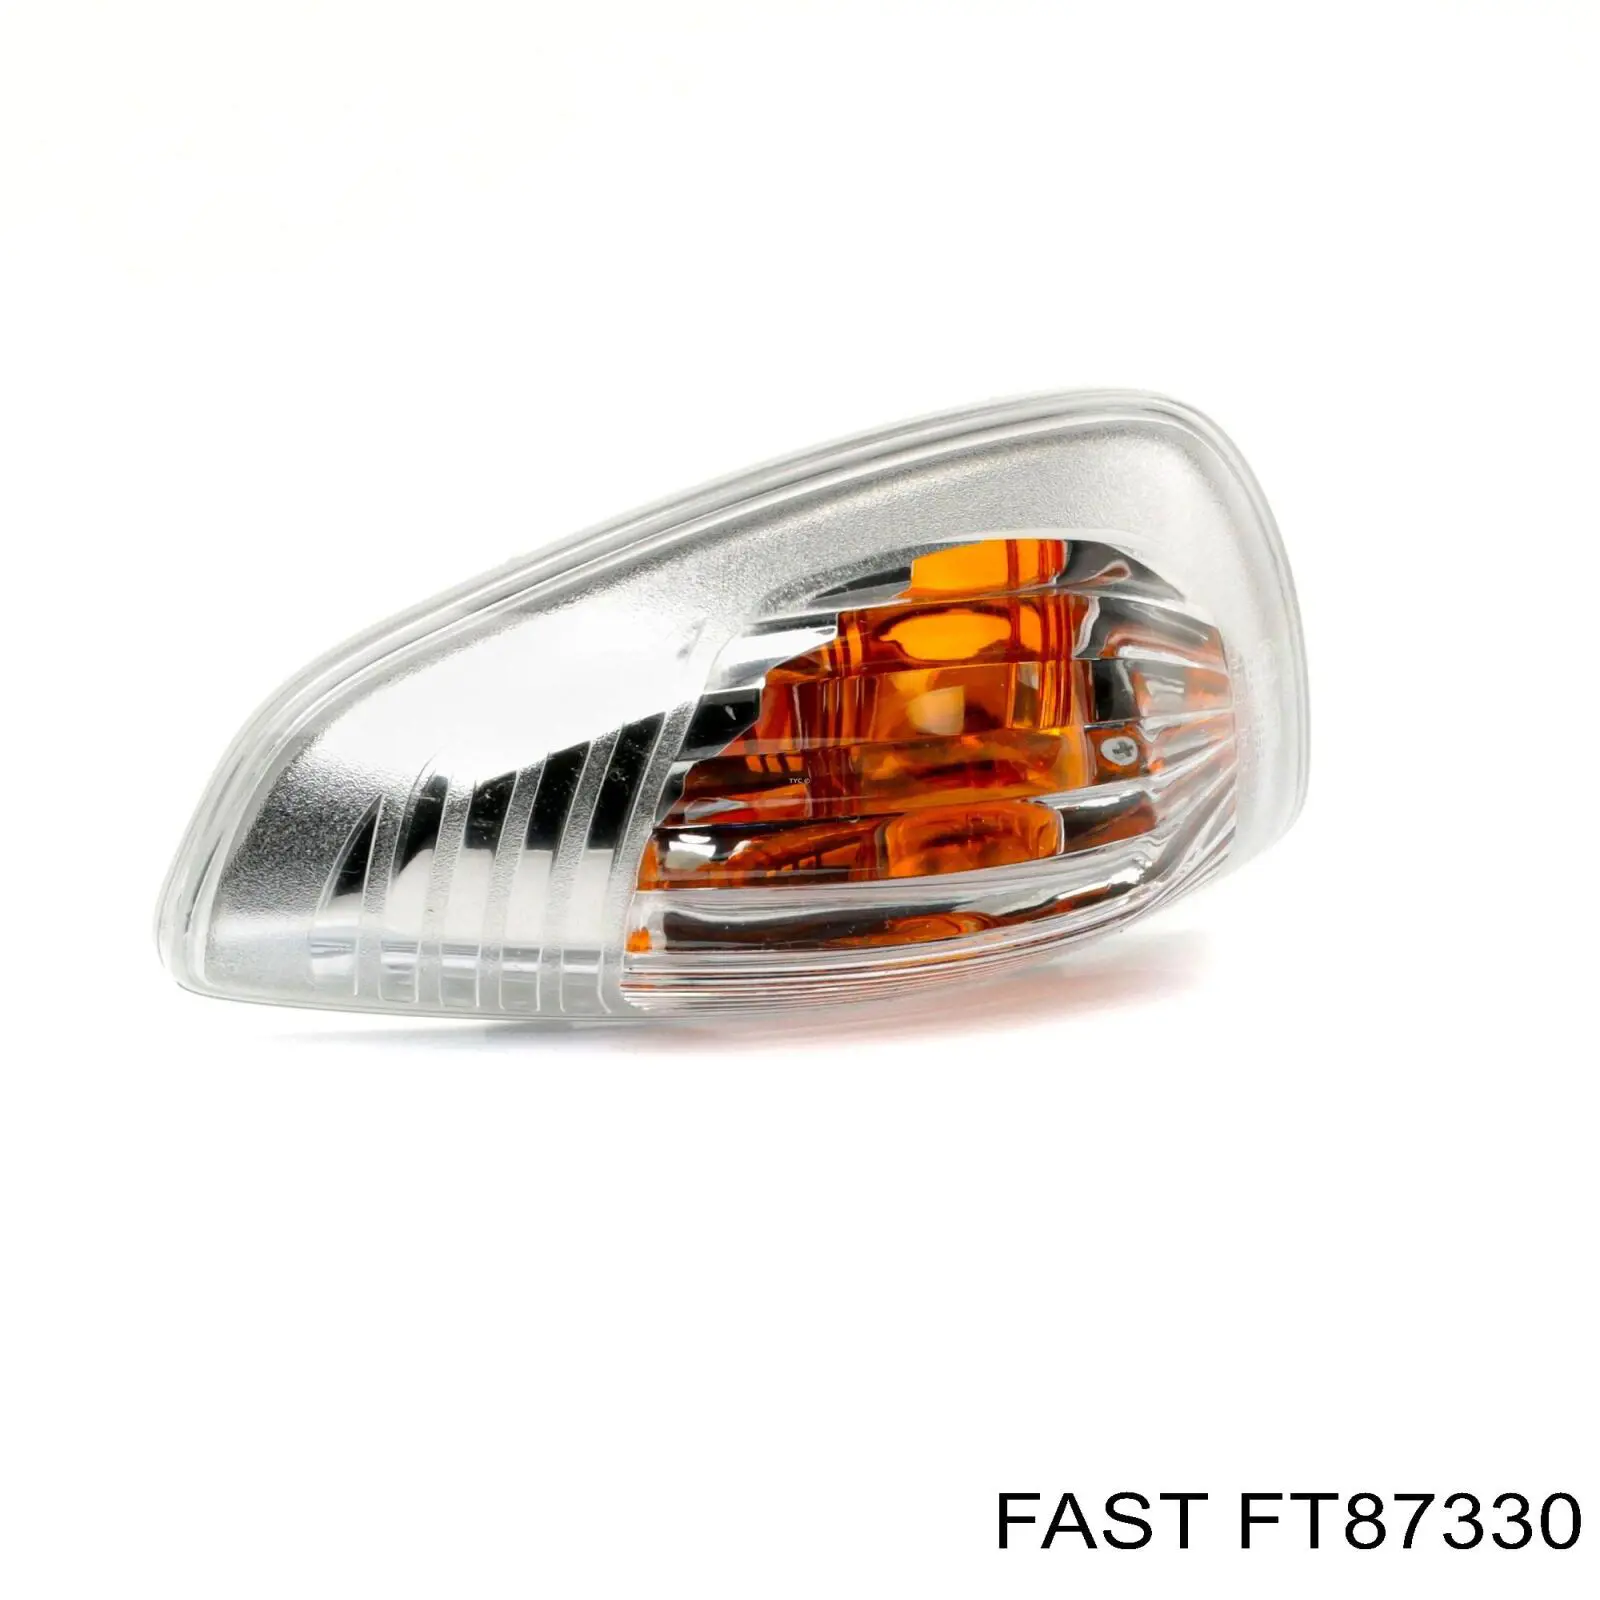 FT87330 Fast luz intermitente de retrovisor exterior derecho